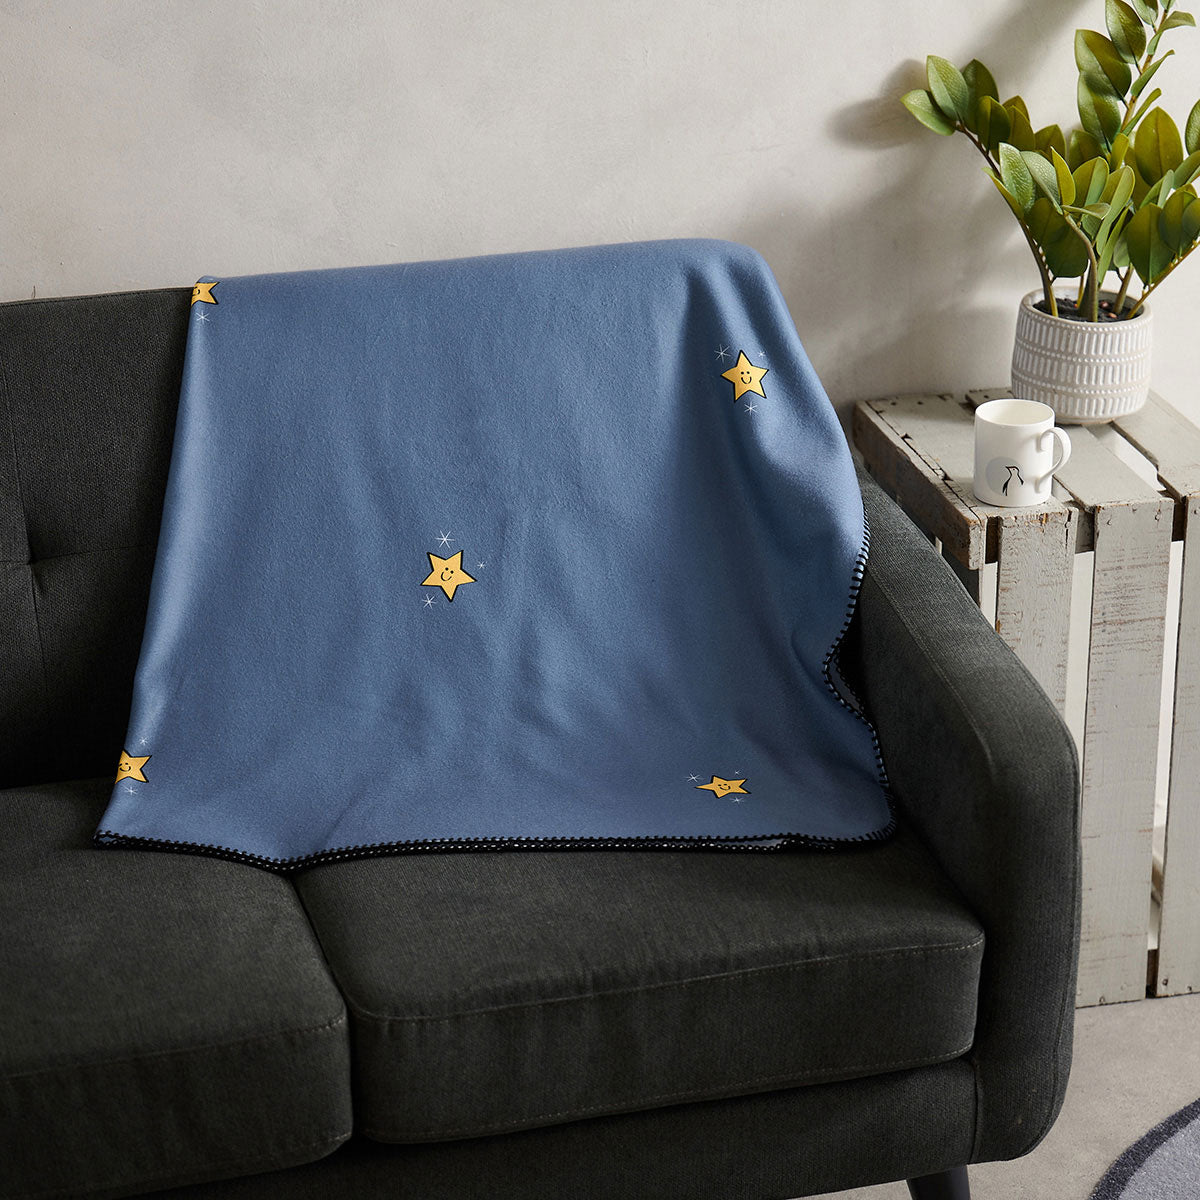 Star Blanket on sofa